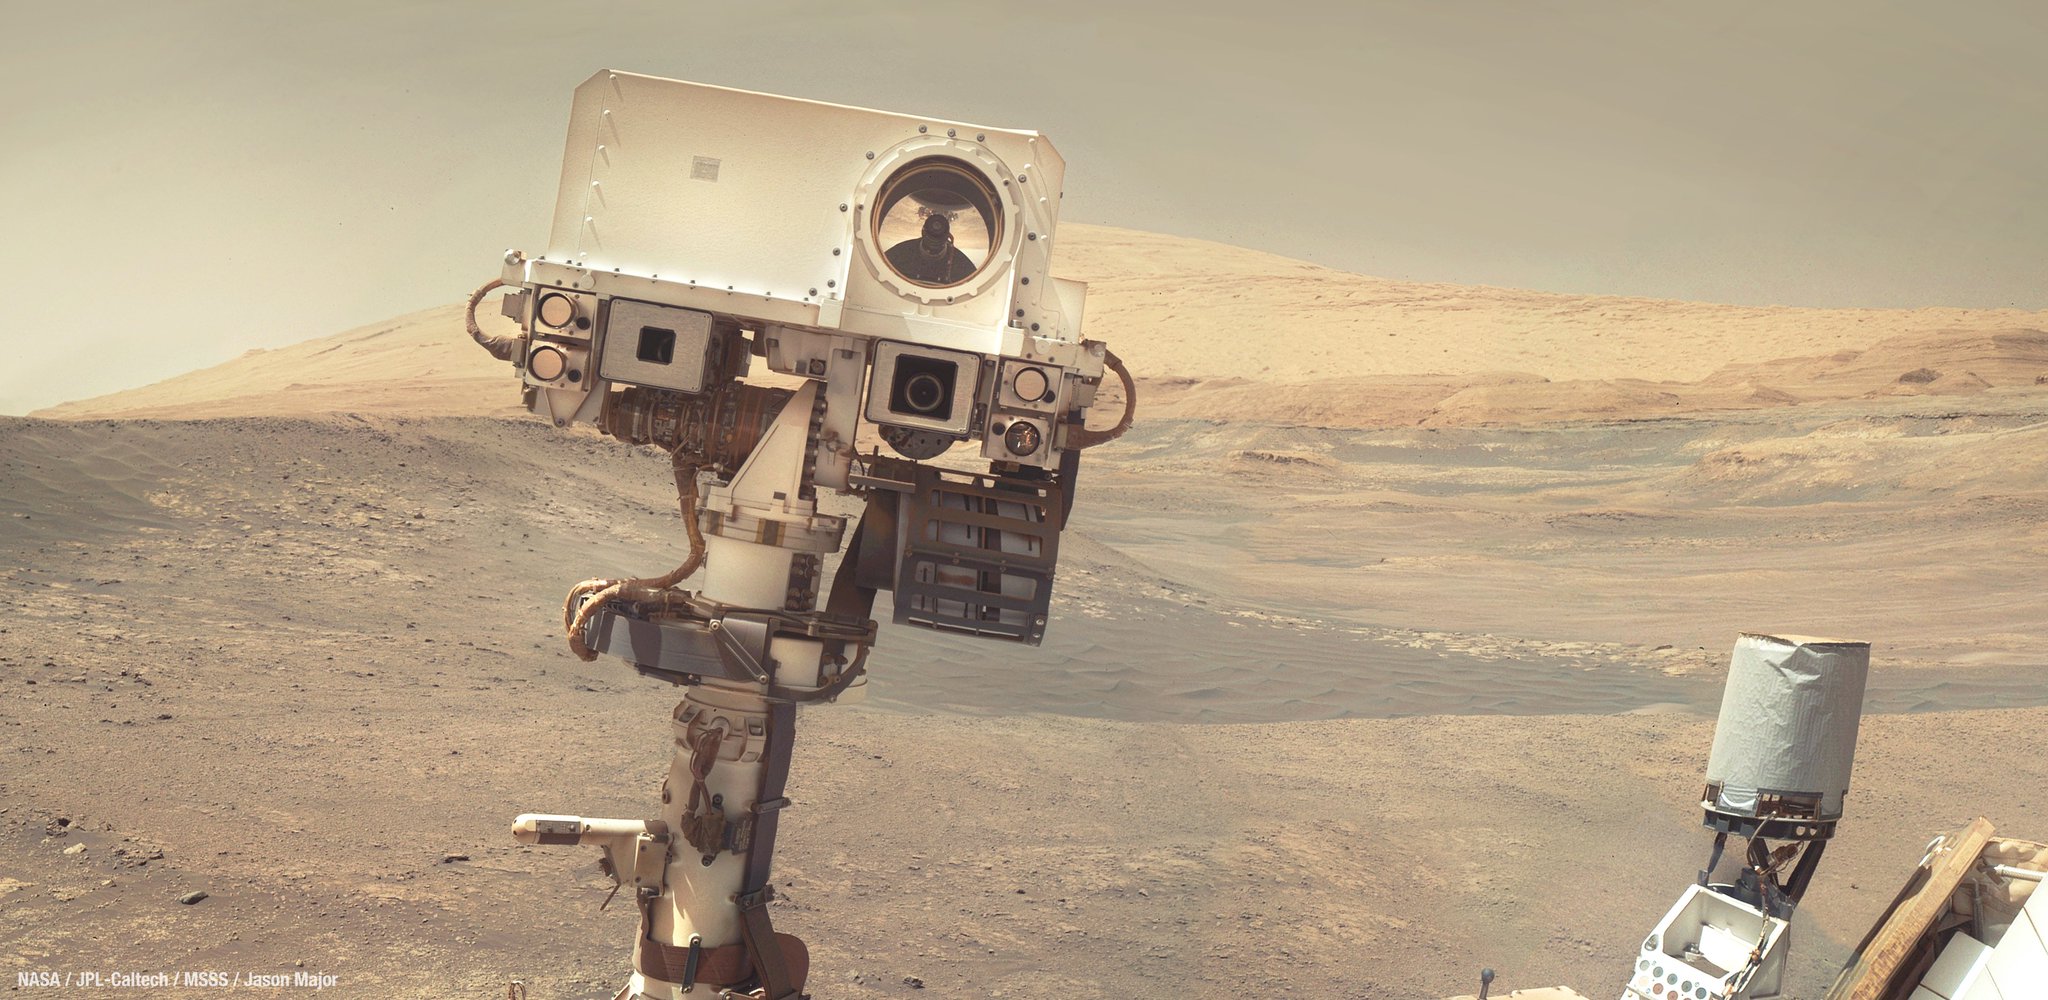 Curiosity sent a new selfie from Mars!